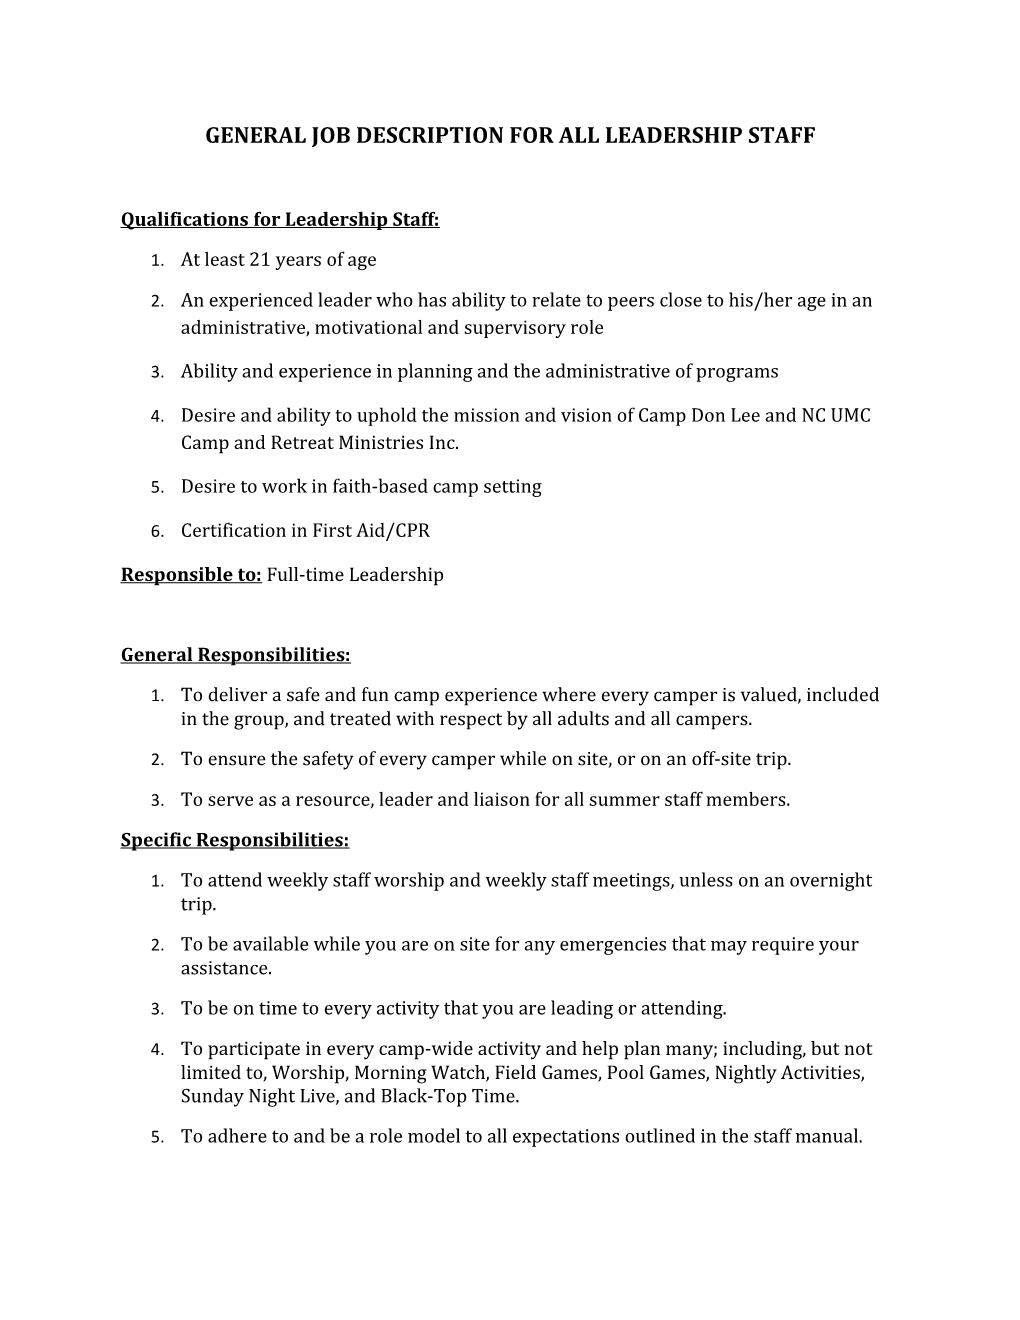 General Job Description for All Leadership Staff